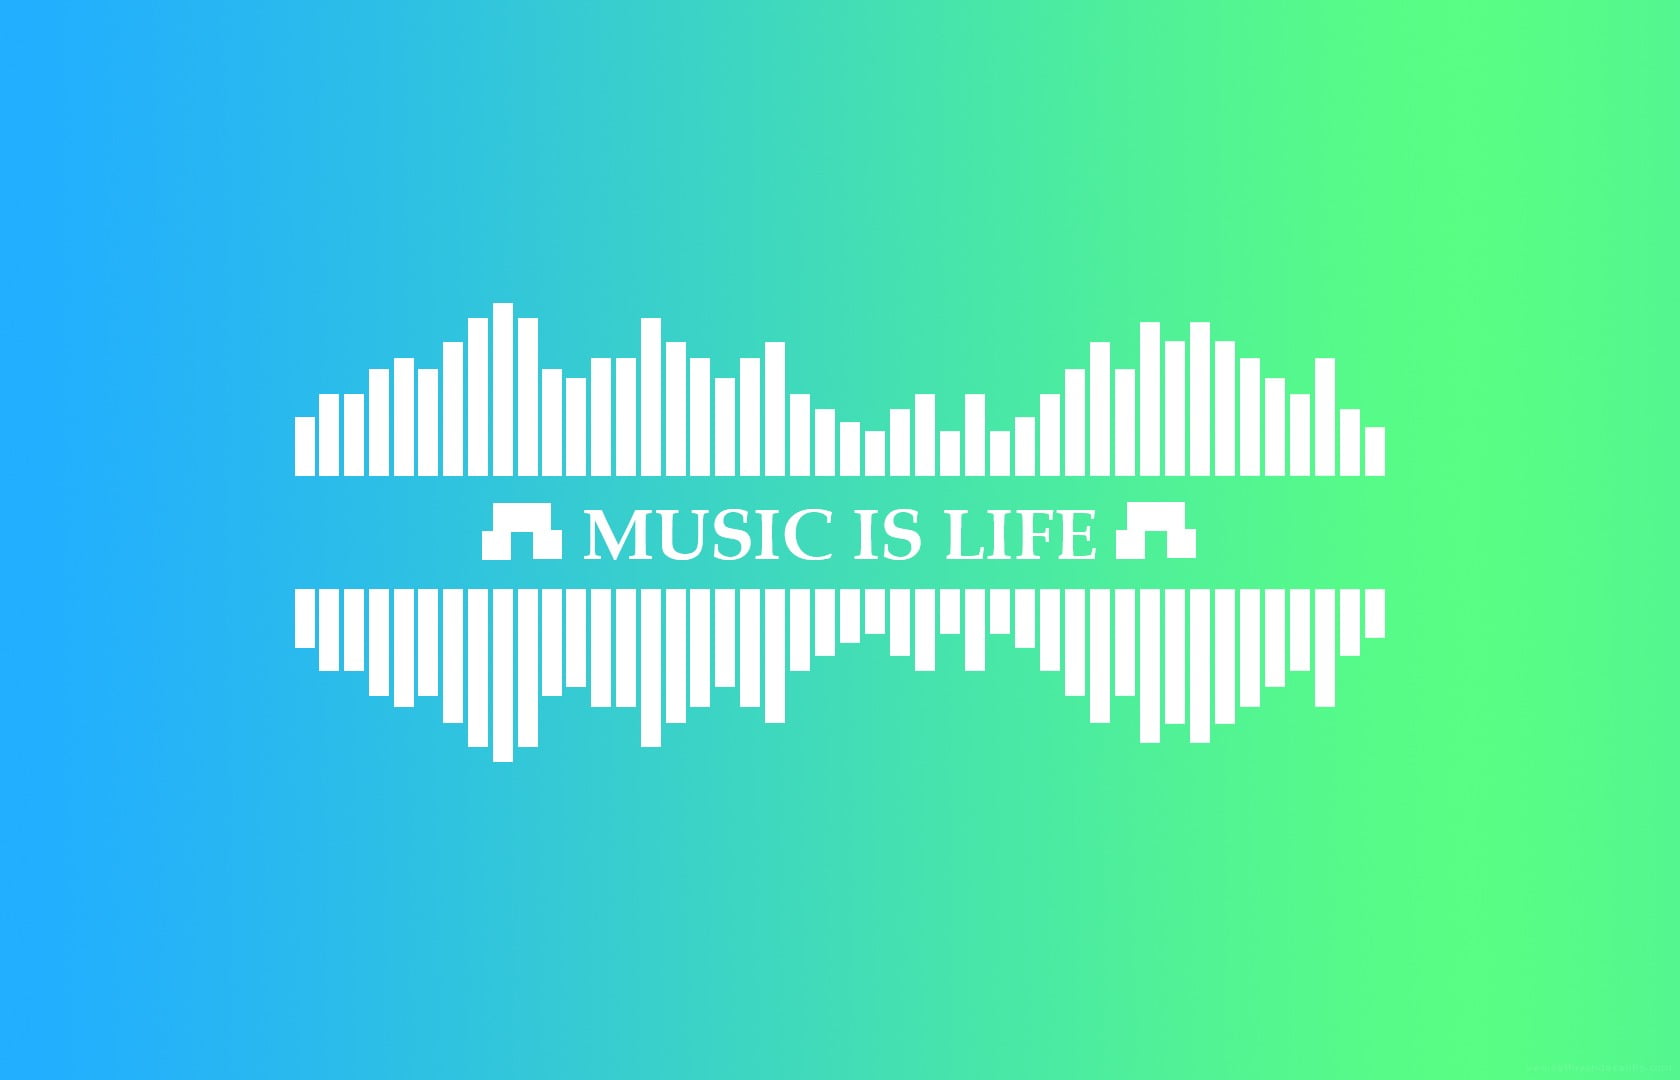 Music is Life logo, music, bars, gradient, simple